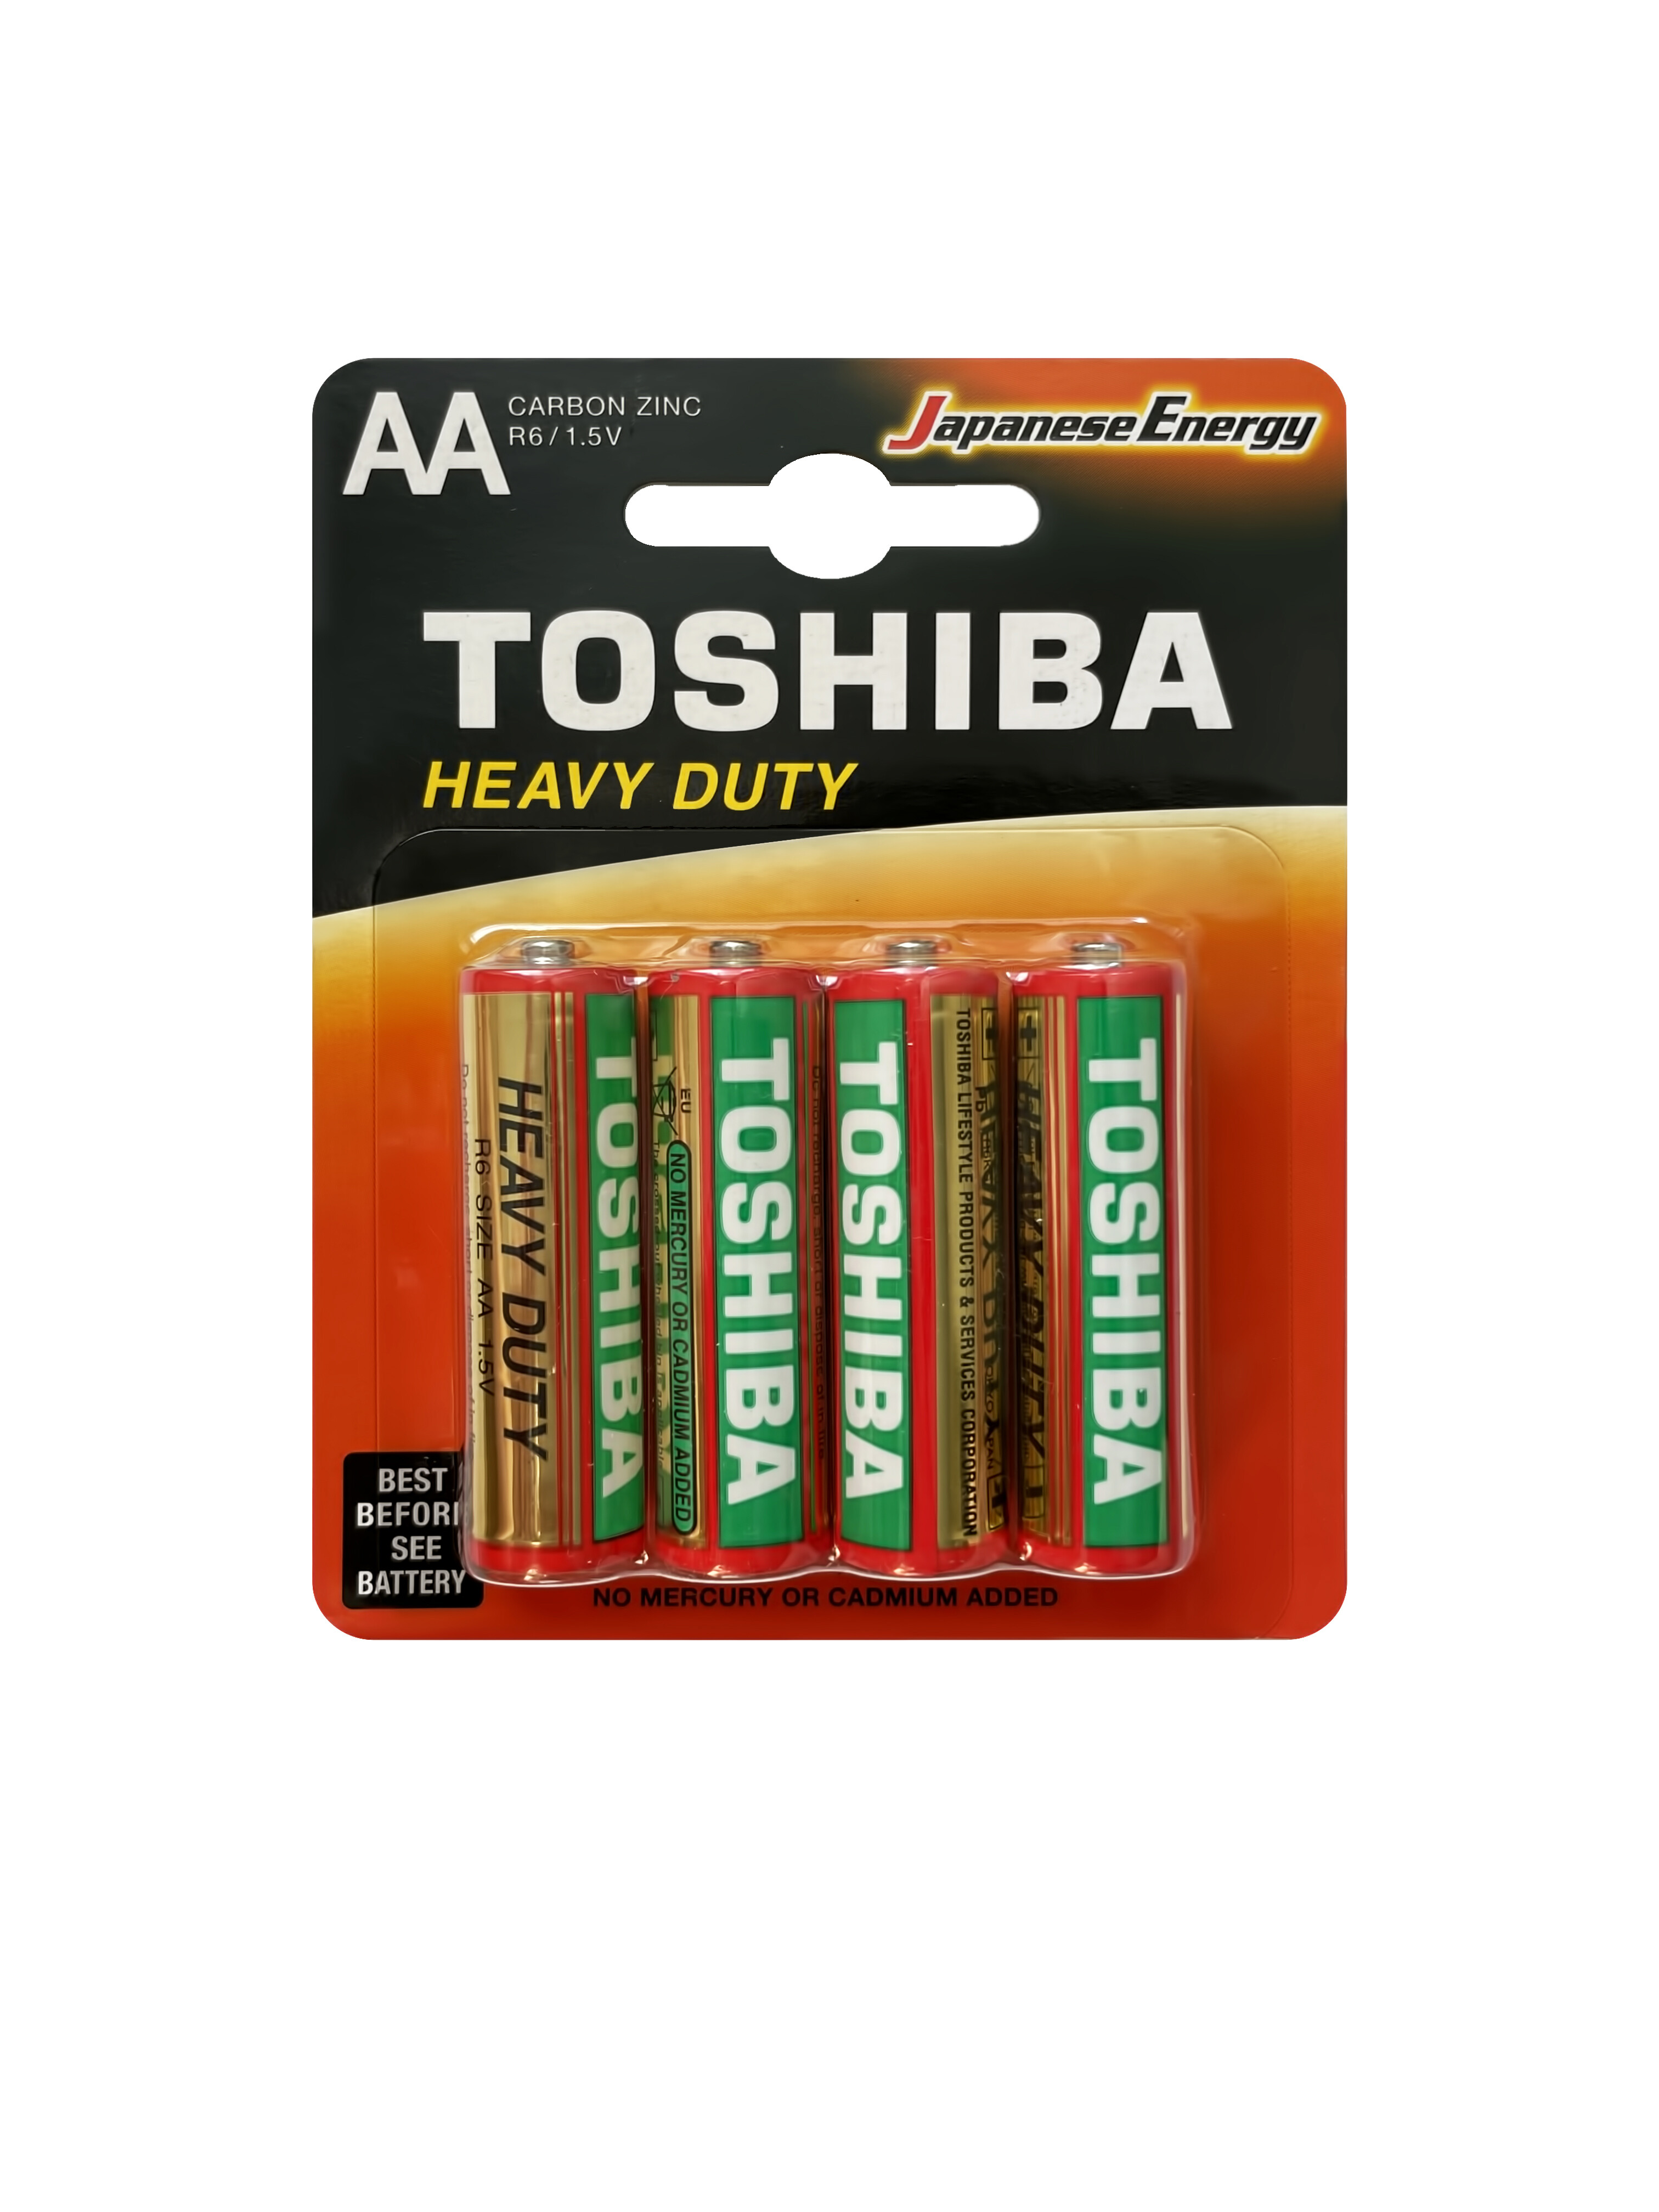 Батарейки Toshiba R6 солевые (zinc) ПАЛЬЧИК Heavy Duty (4шт) AA 1,5V батарейки toshiba lr14 щелочные alkaline дюймовочка high power 2шт c 1 5v